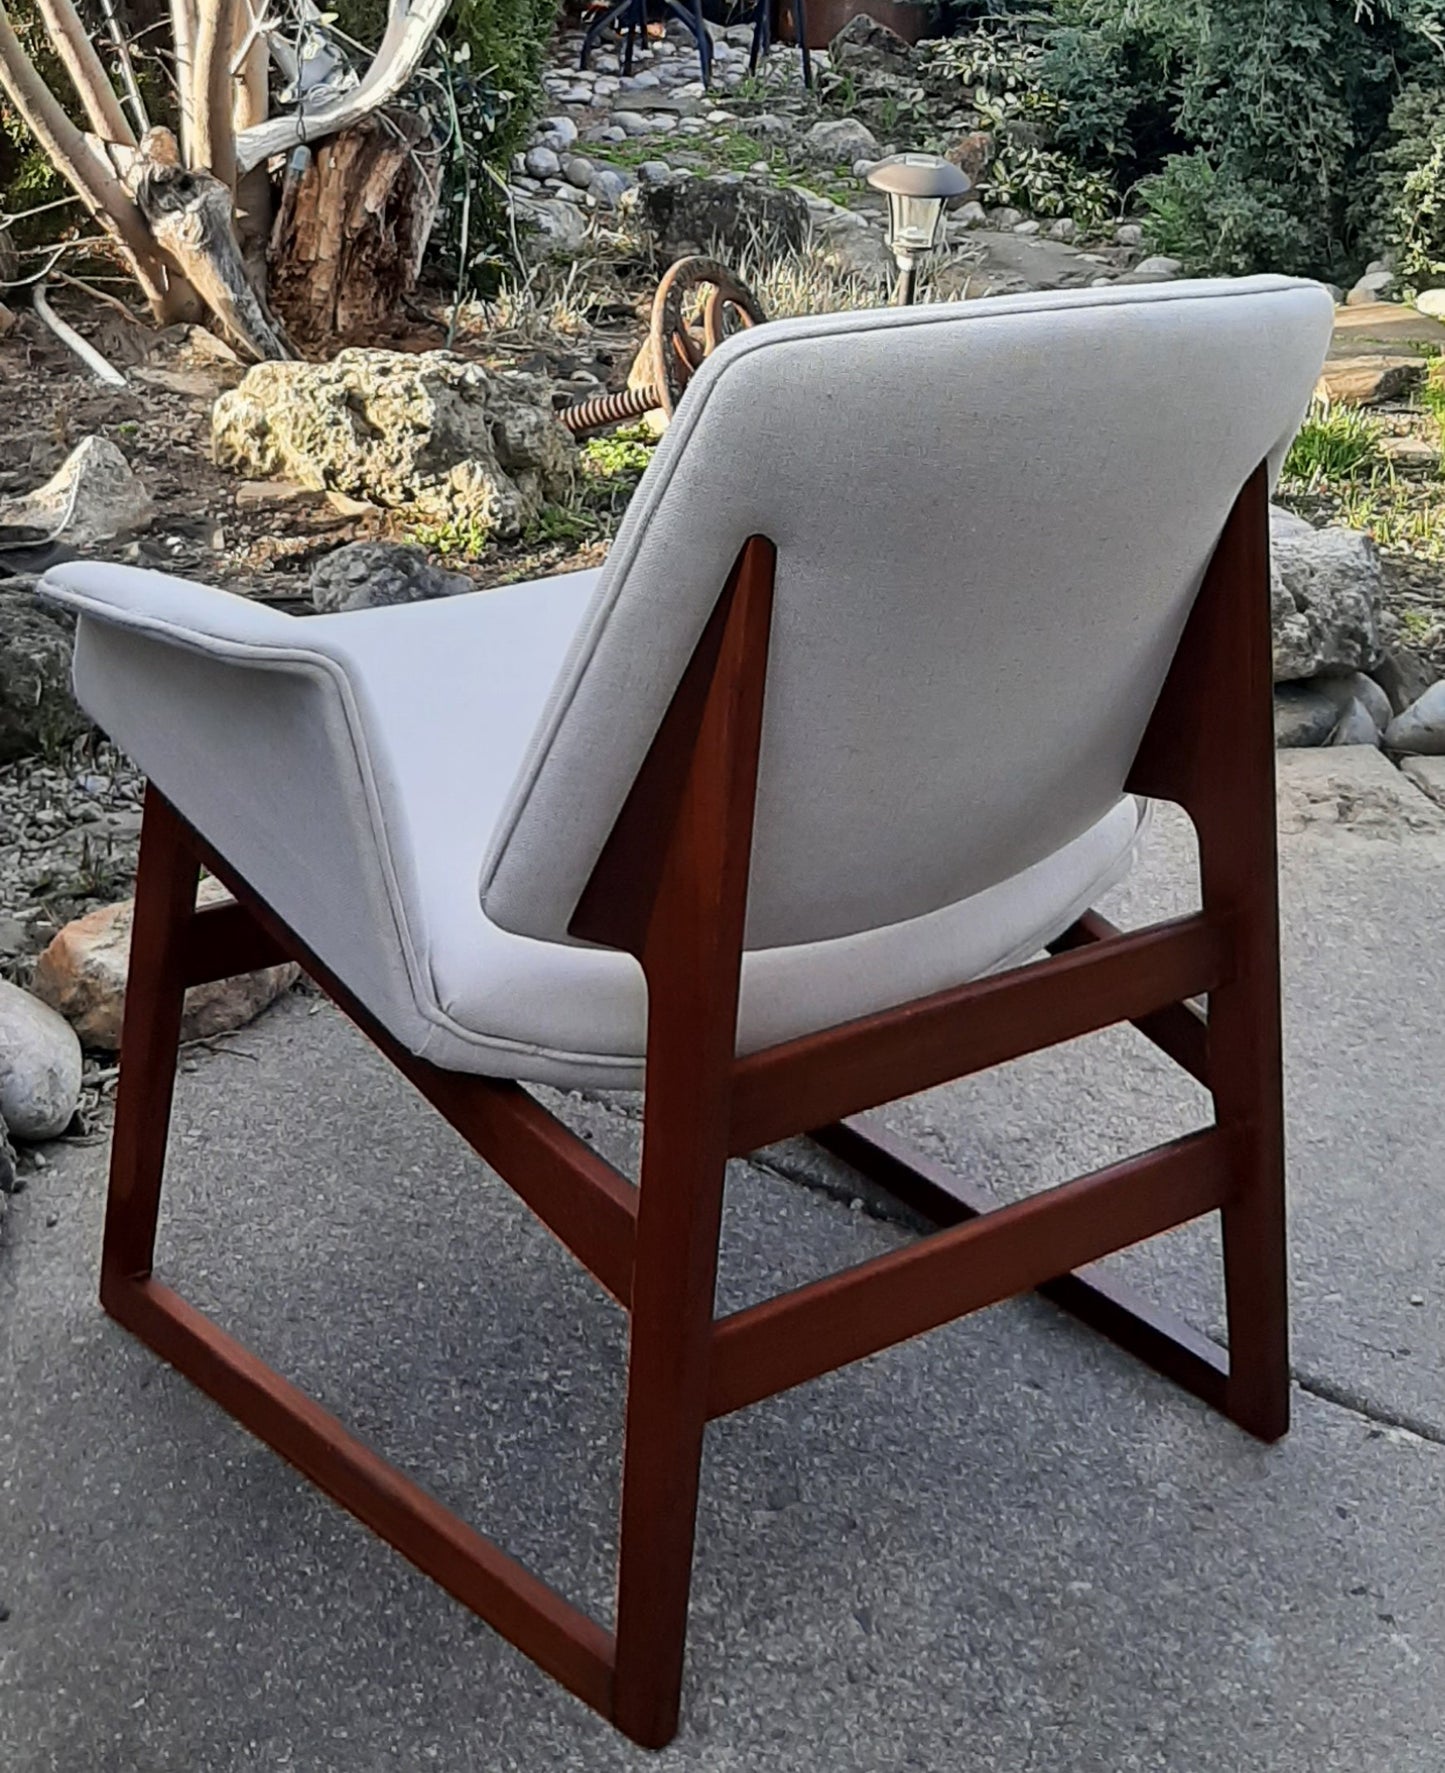 REFINISHED Danish Mid-Century Modern Teak Lounge Chair by Illum Wikkelsø